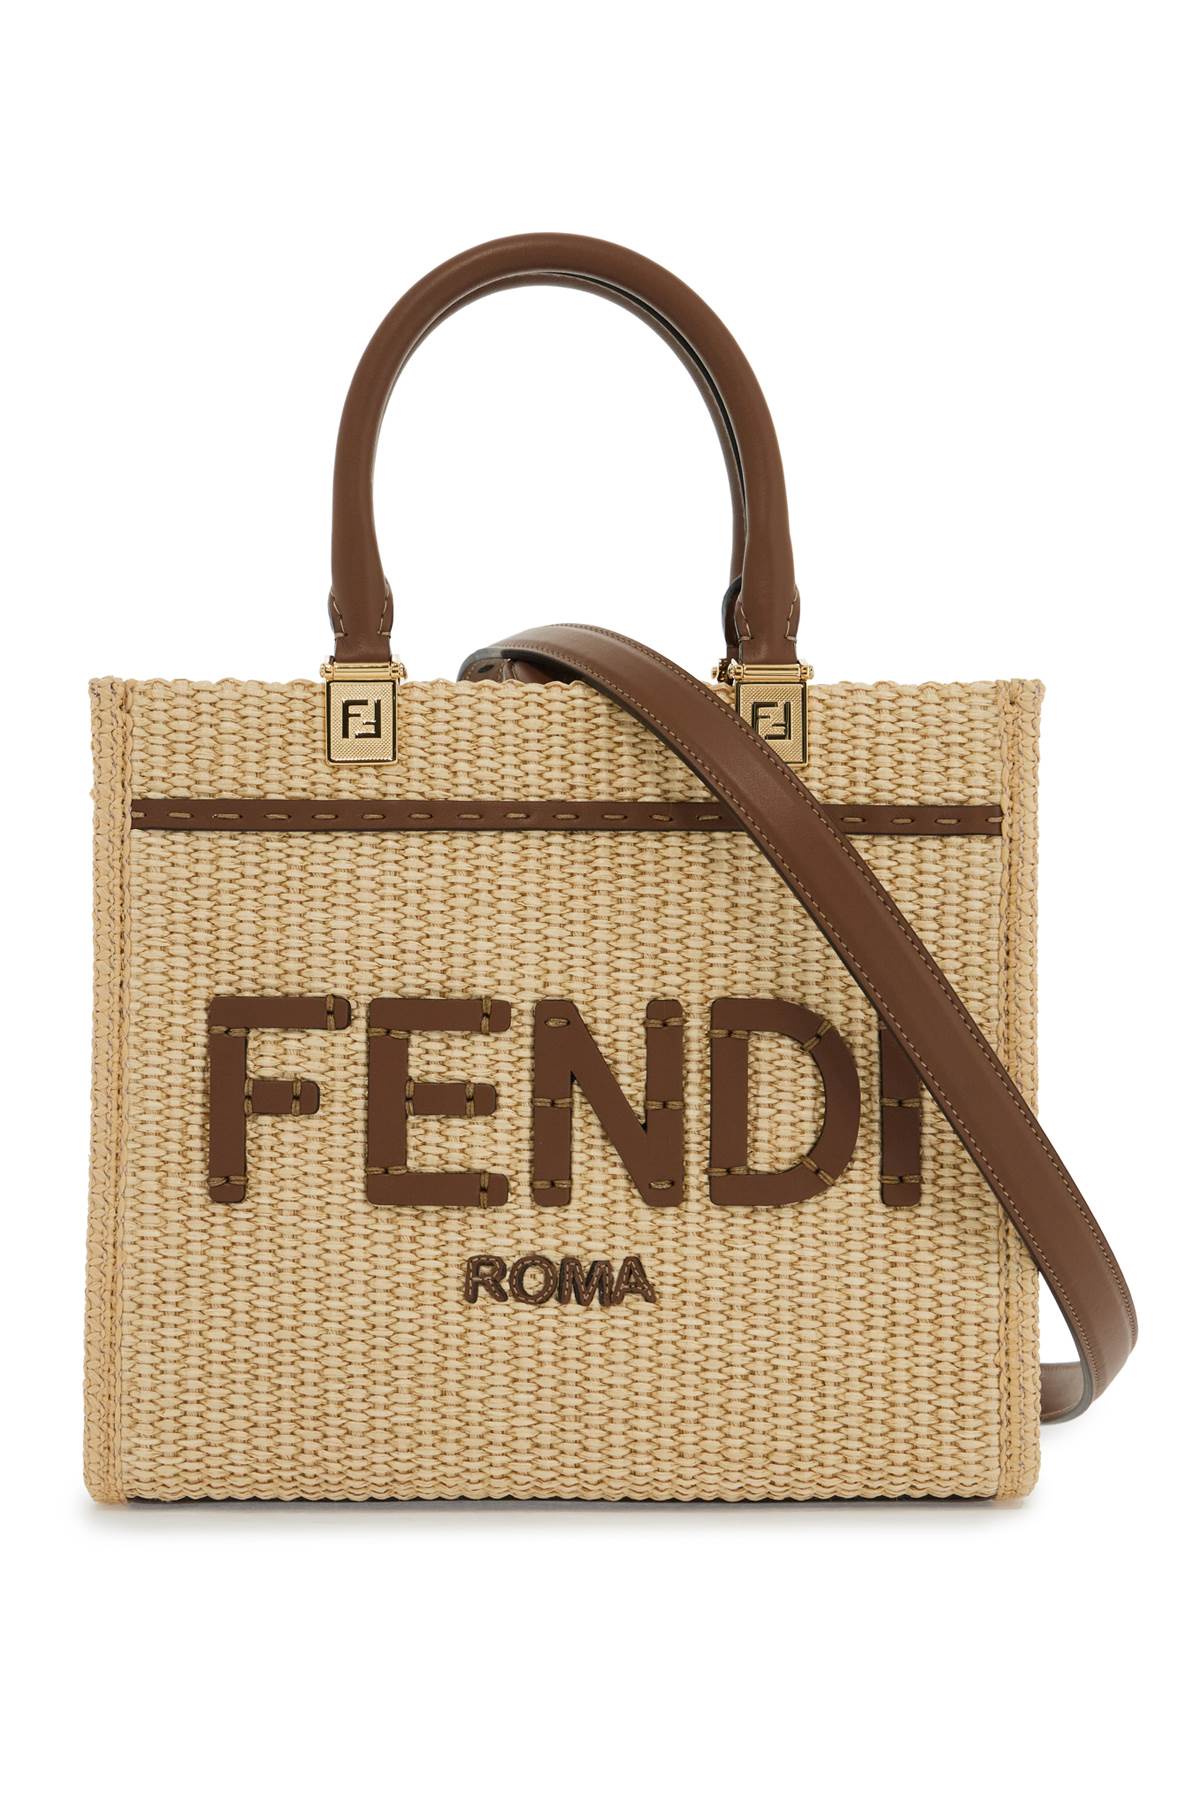 FENDI FENDI small sunshine handbag